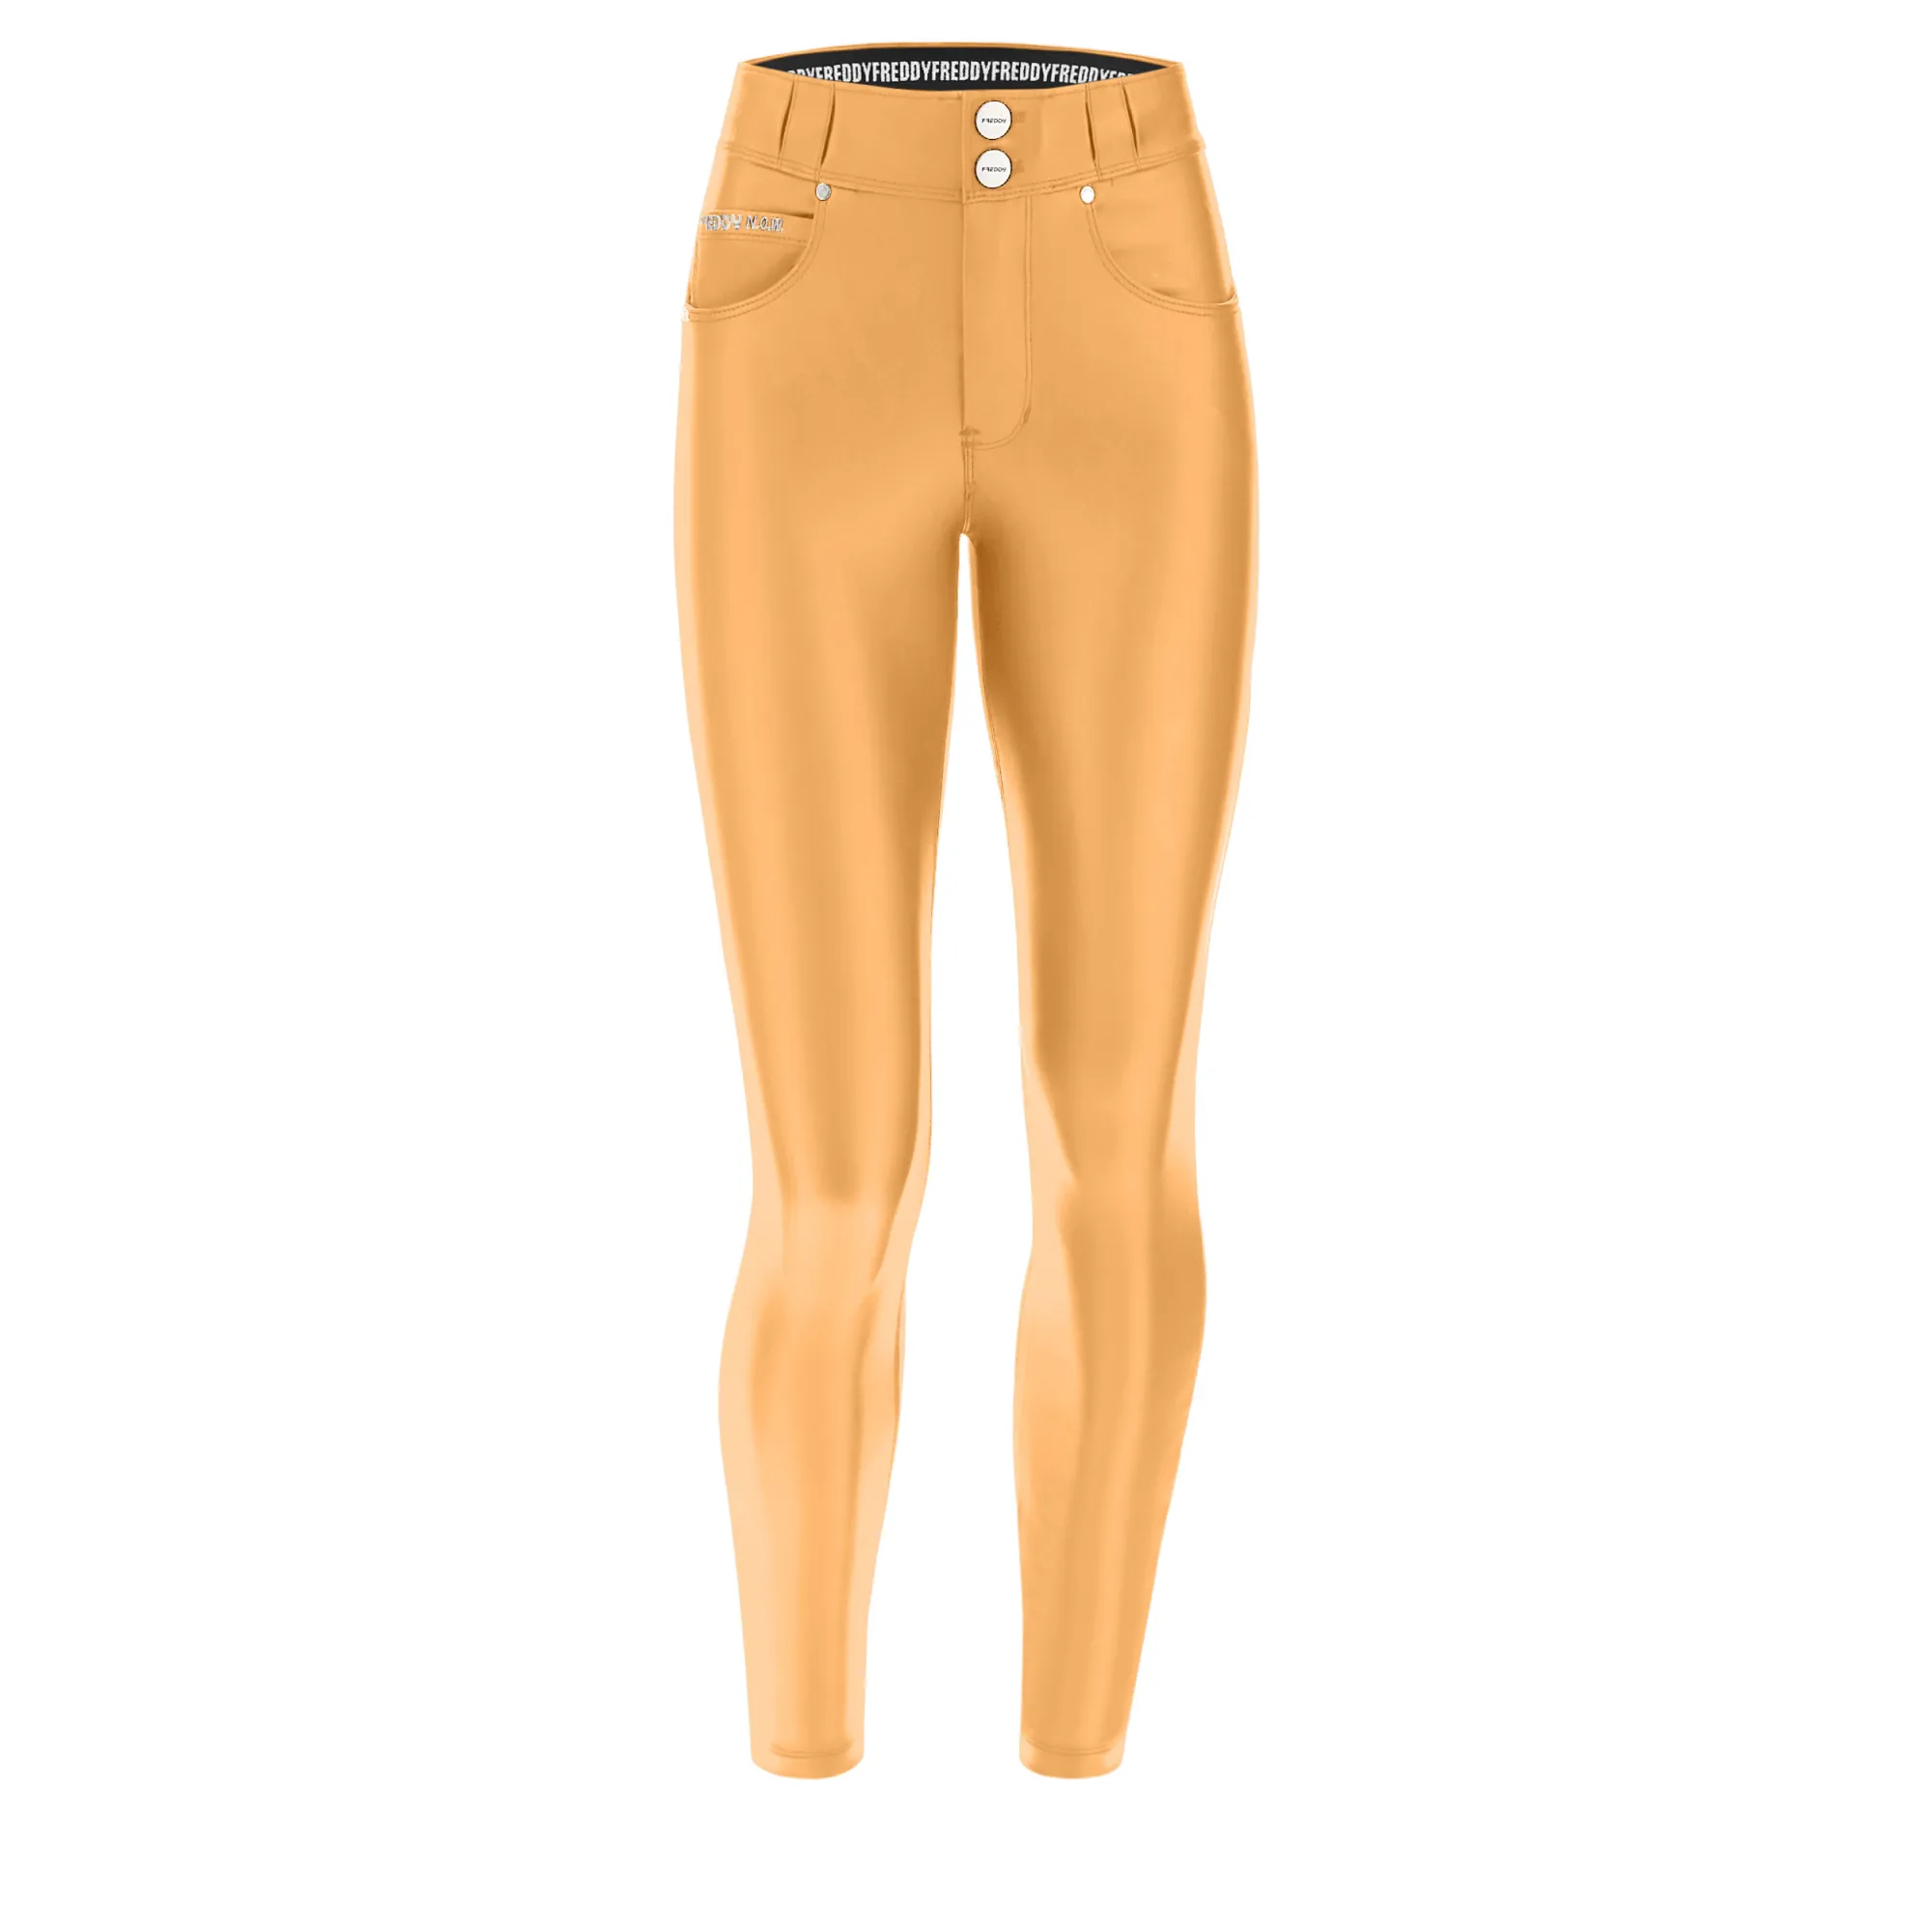 Freddy N.O.W.® Vegan Leather Damen Comfort Lederhose - 7/8 Mid Waist Super Skinny - Orange - A50